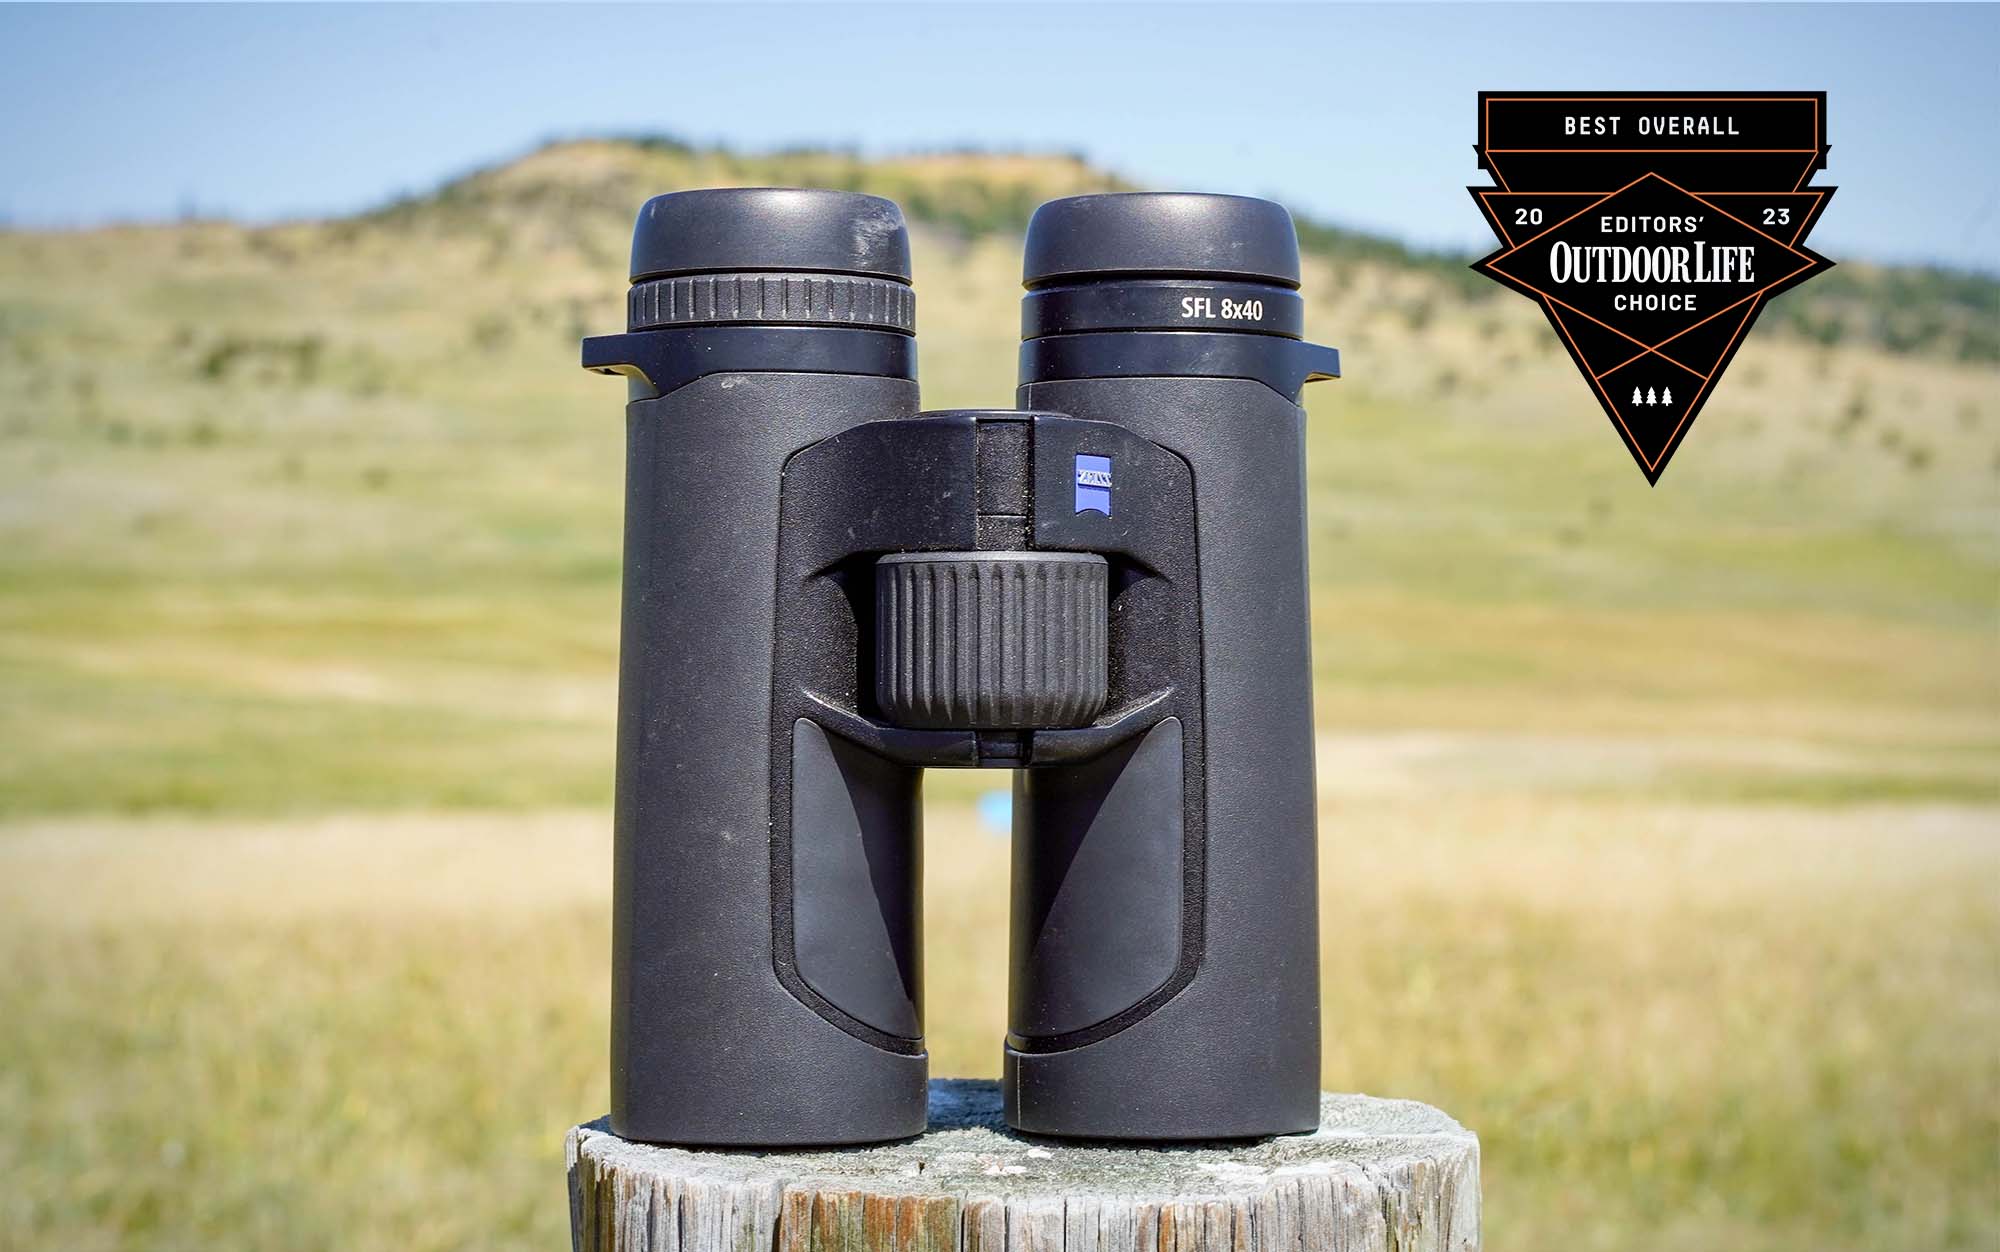 The best overall hunting binocular.